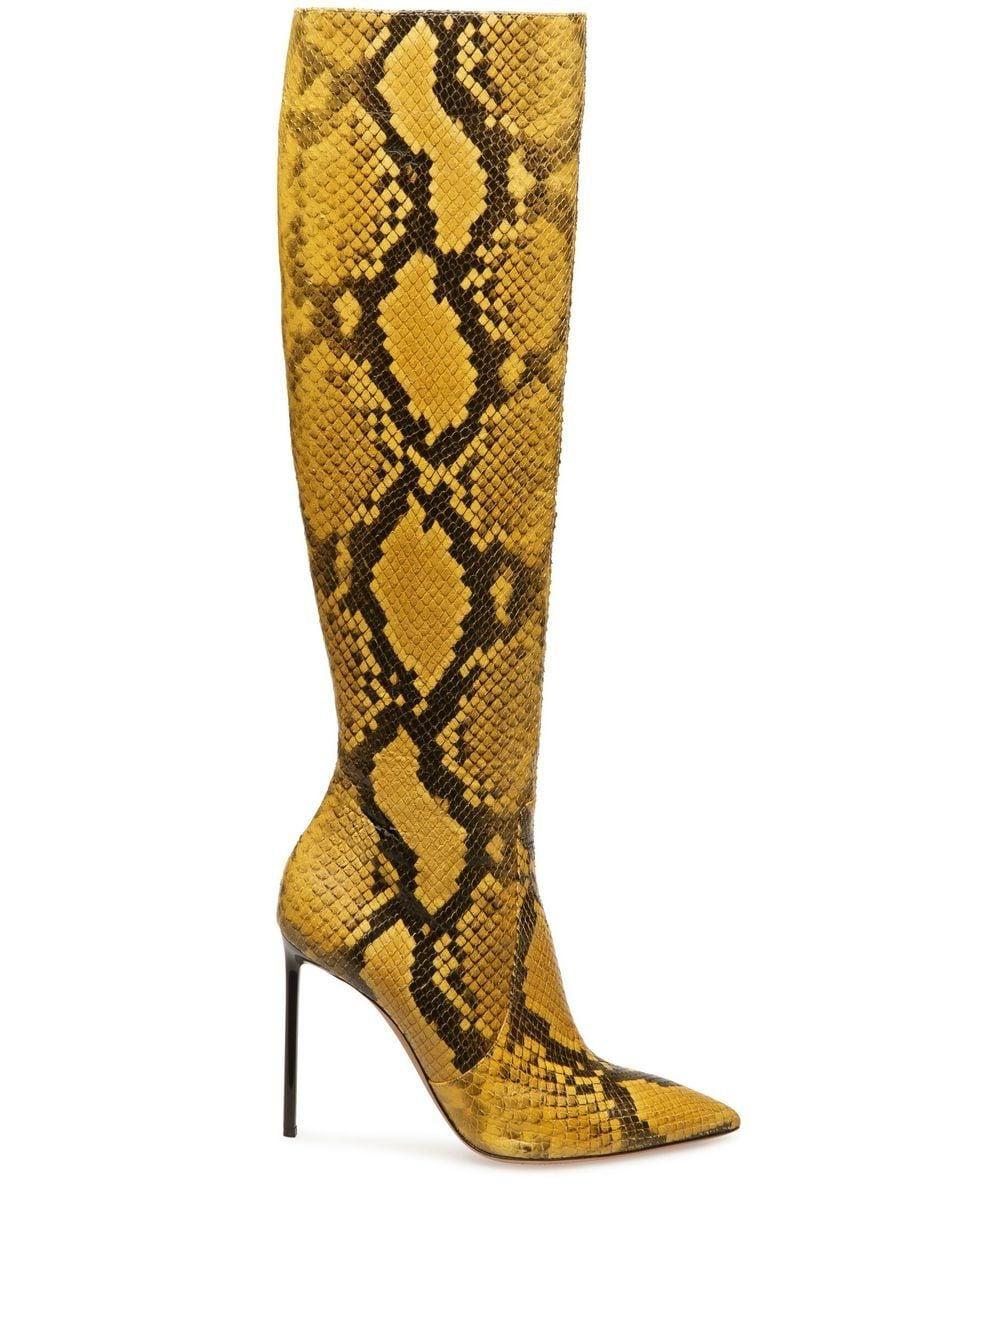 Bally Barbra Snake-print Boots in Metallic | Lyst